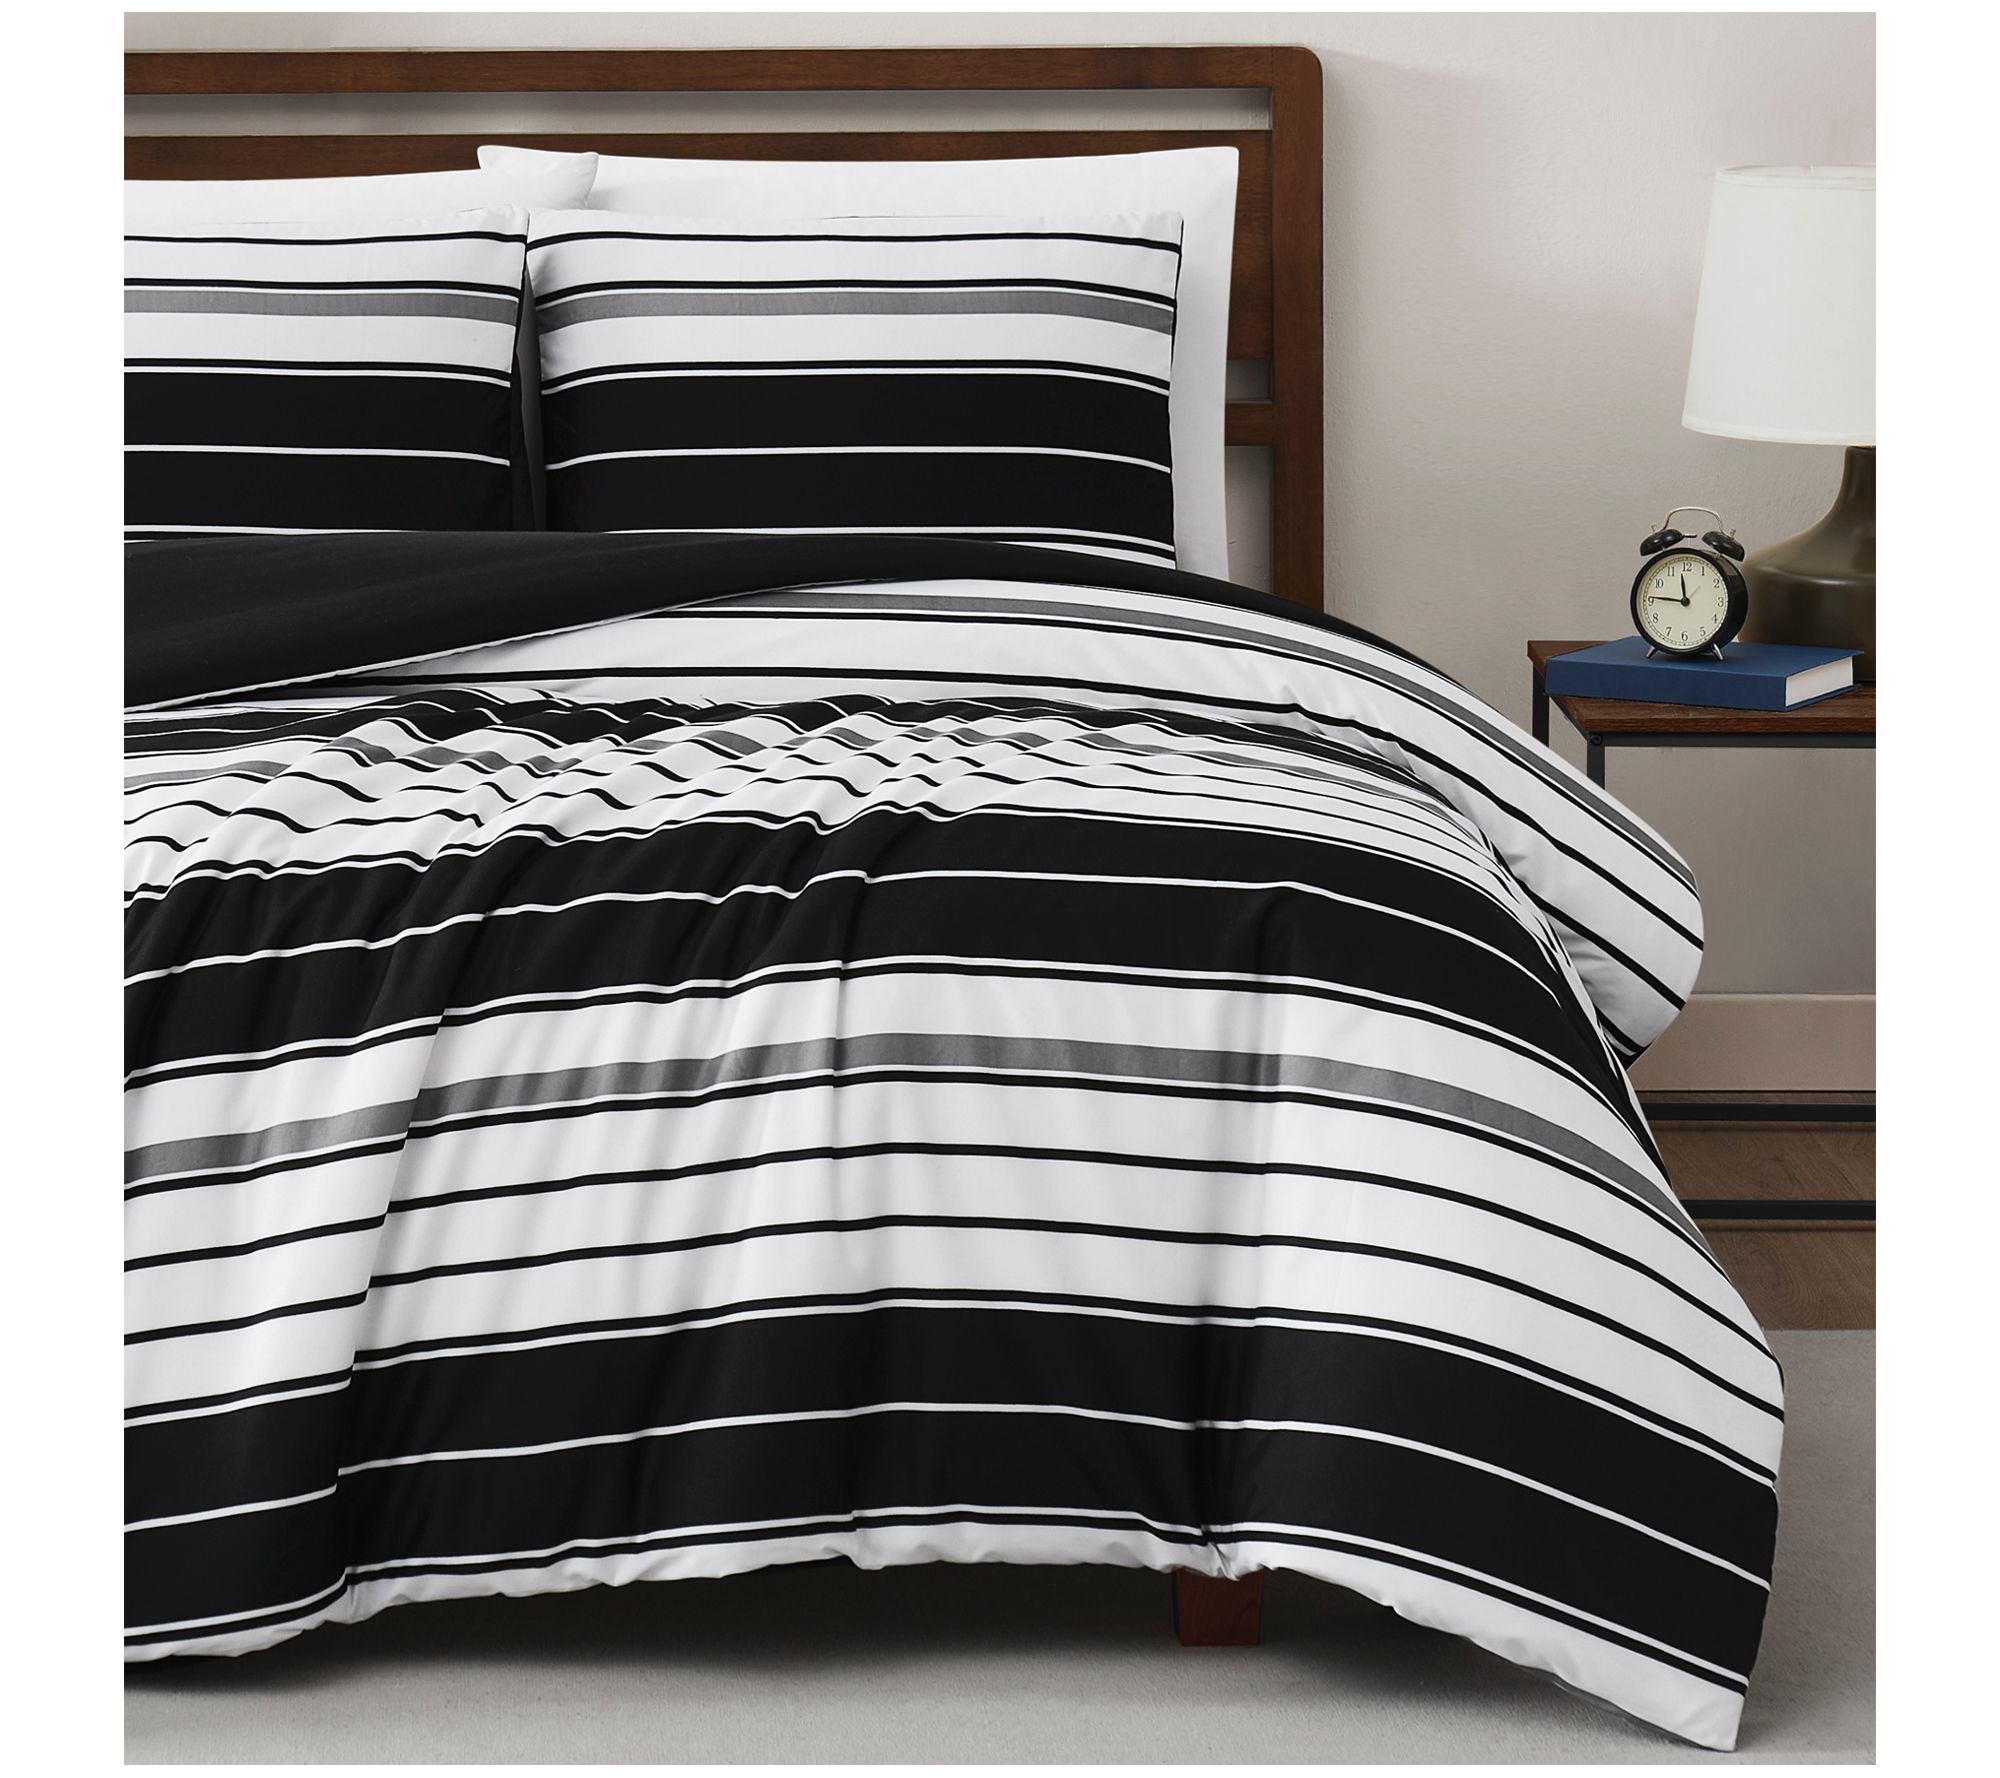 Black And White Striped Comforter